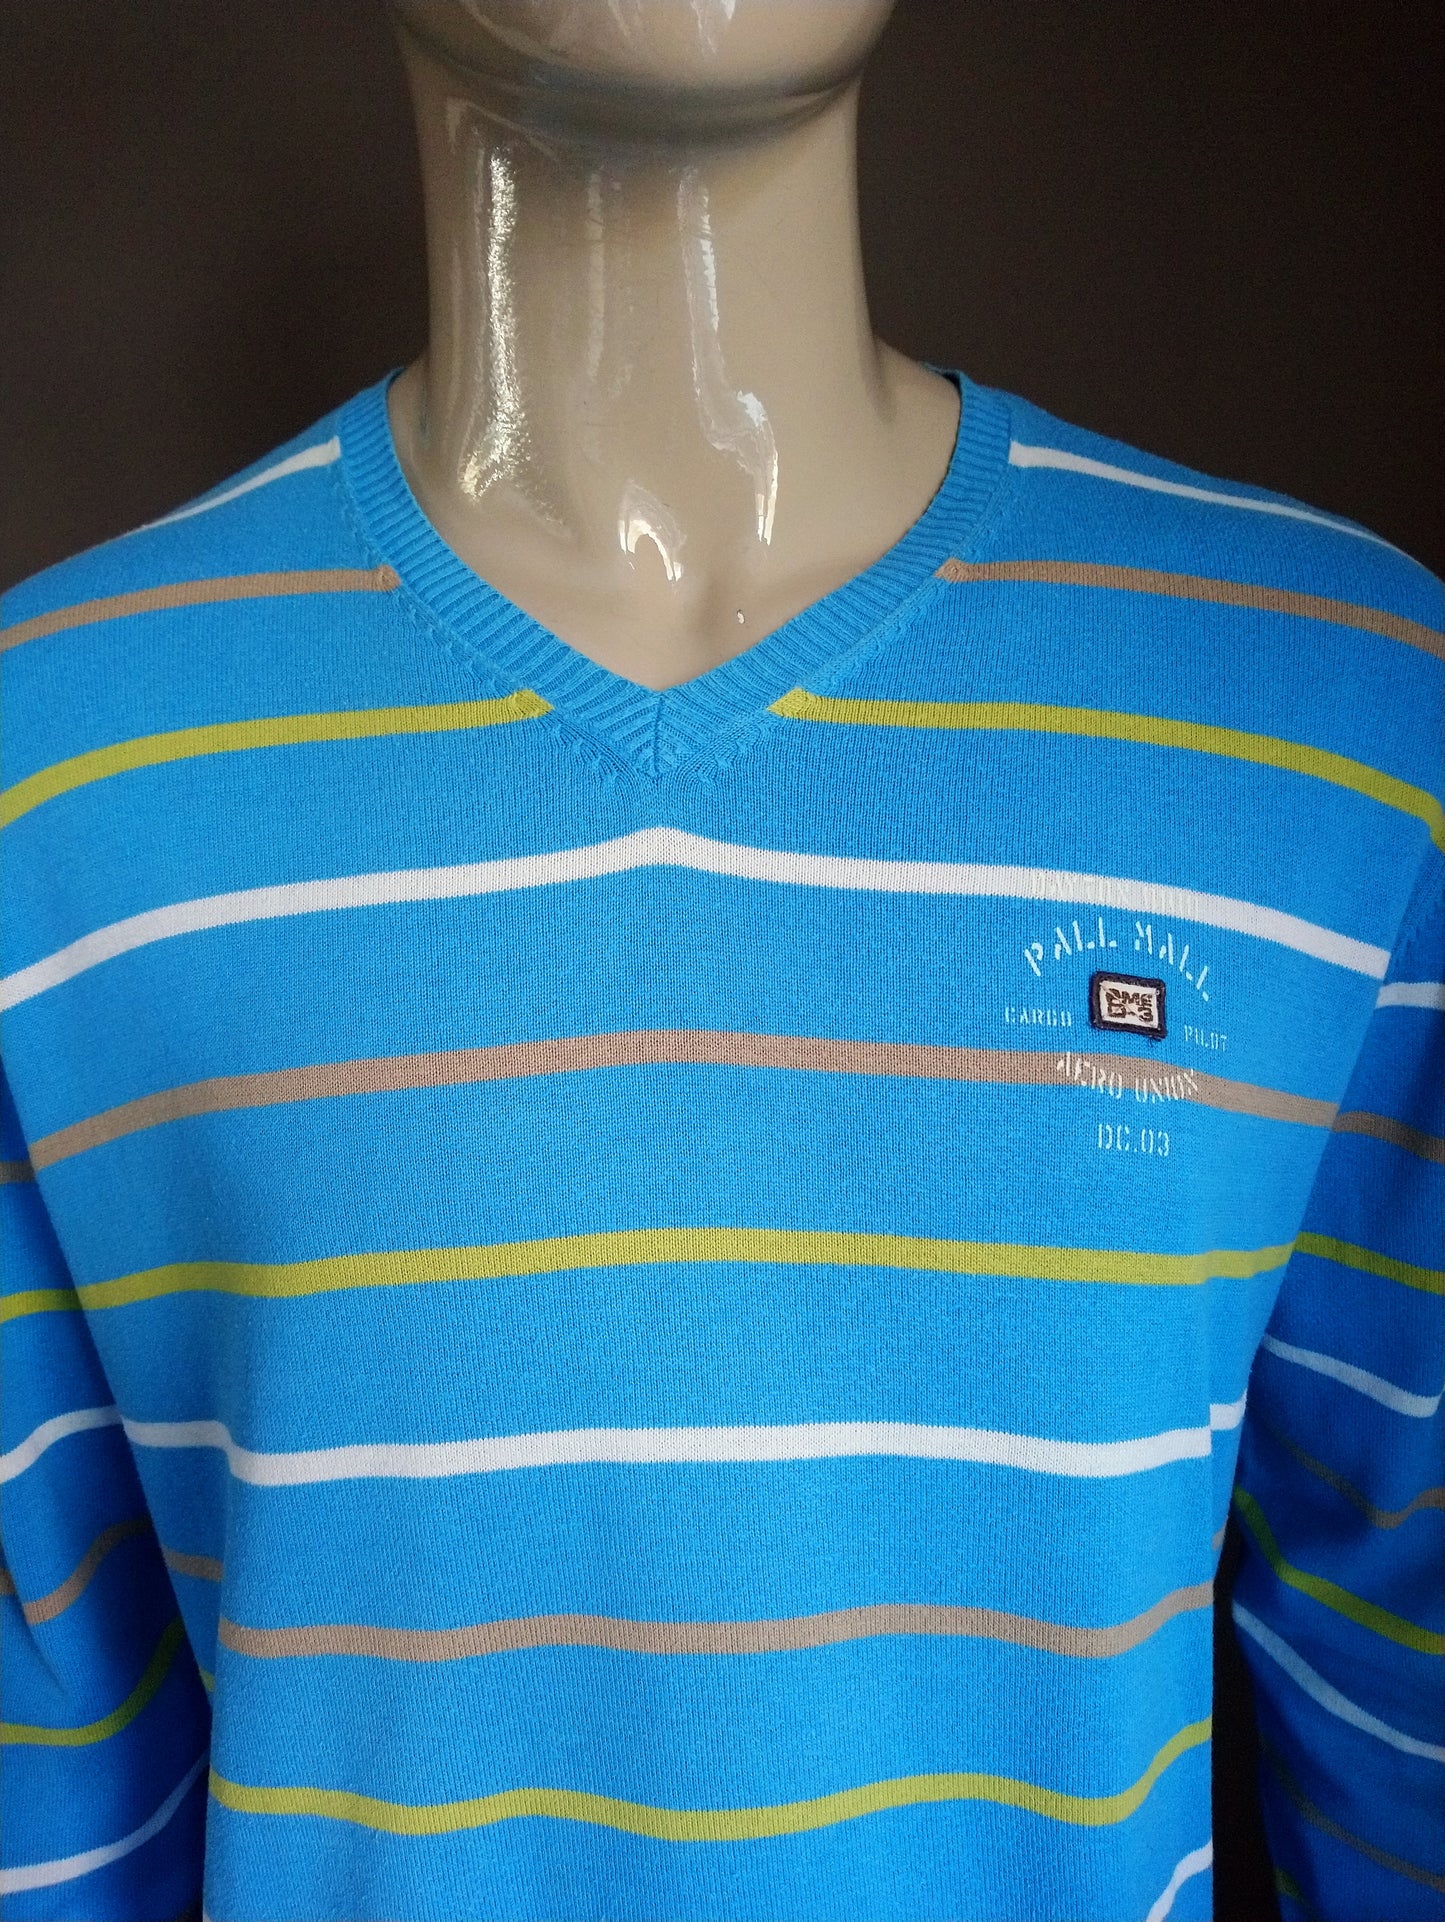 B Auswahl: PMME Pall Mall Sweater mit V-Ausschnitt. Blau grün braun weiß gestreift. Größe xl. Flecken